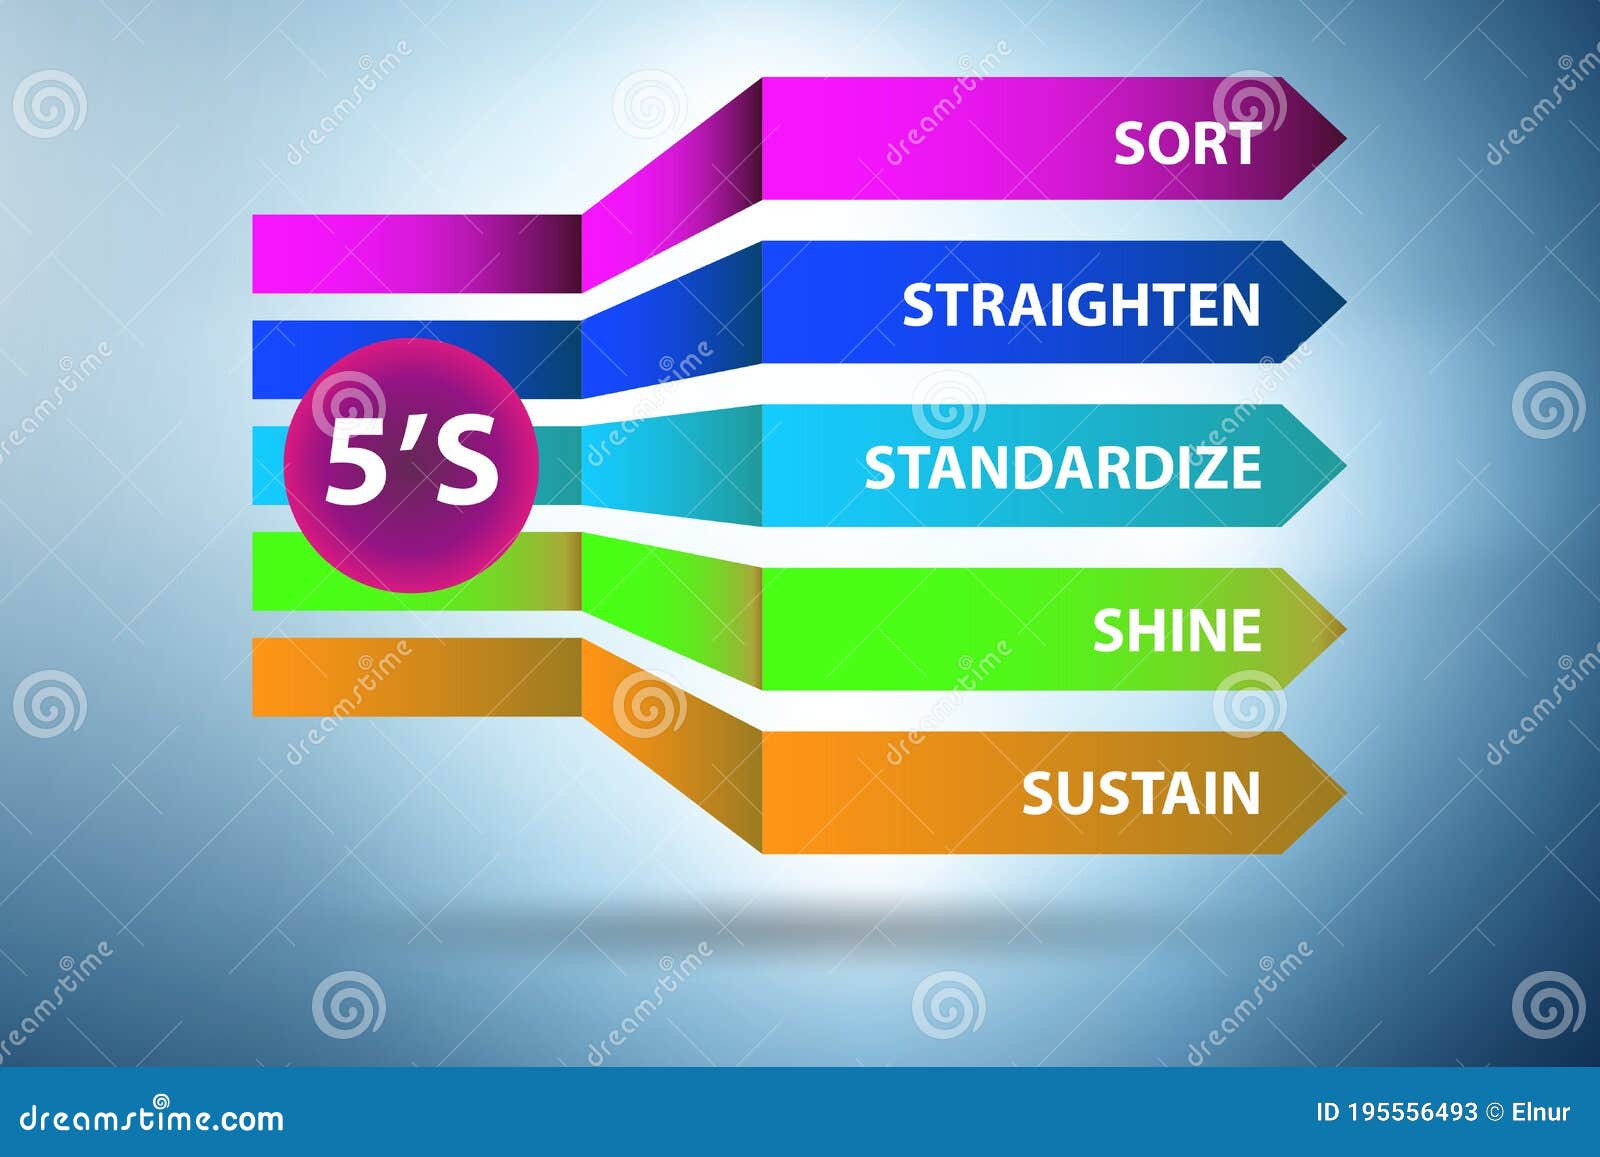 5S Workplace Organization Method Concept Technique Stock Illustration ...